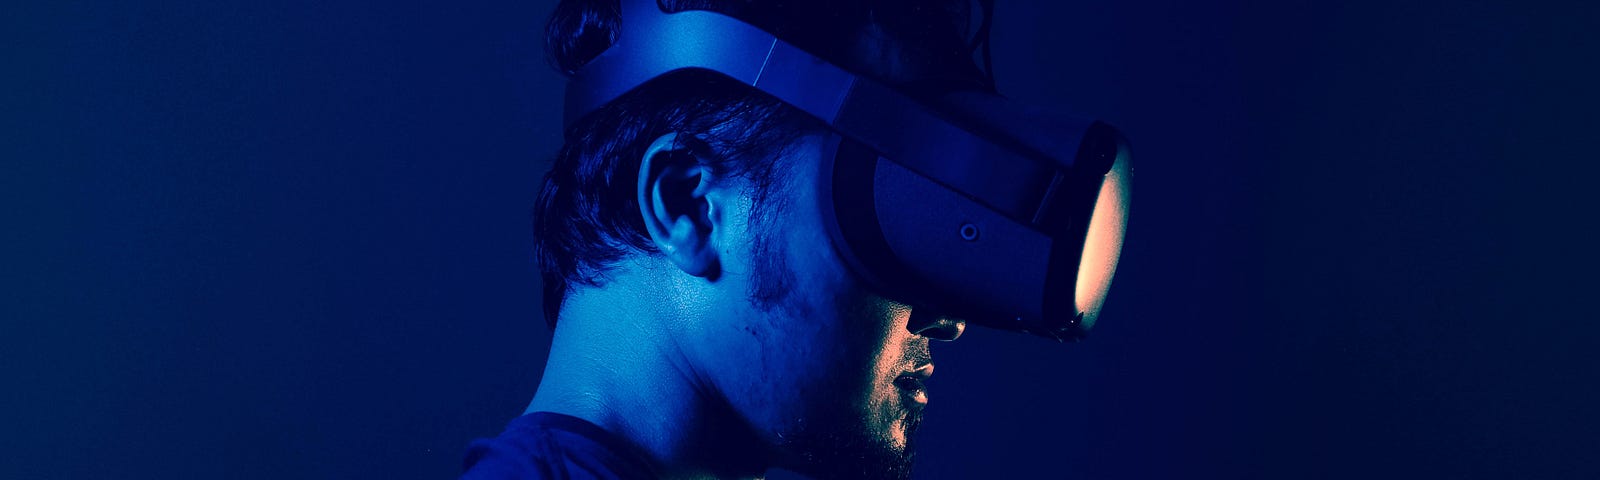 Stylish dark blue image of a man wearing Oculus headset.